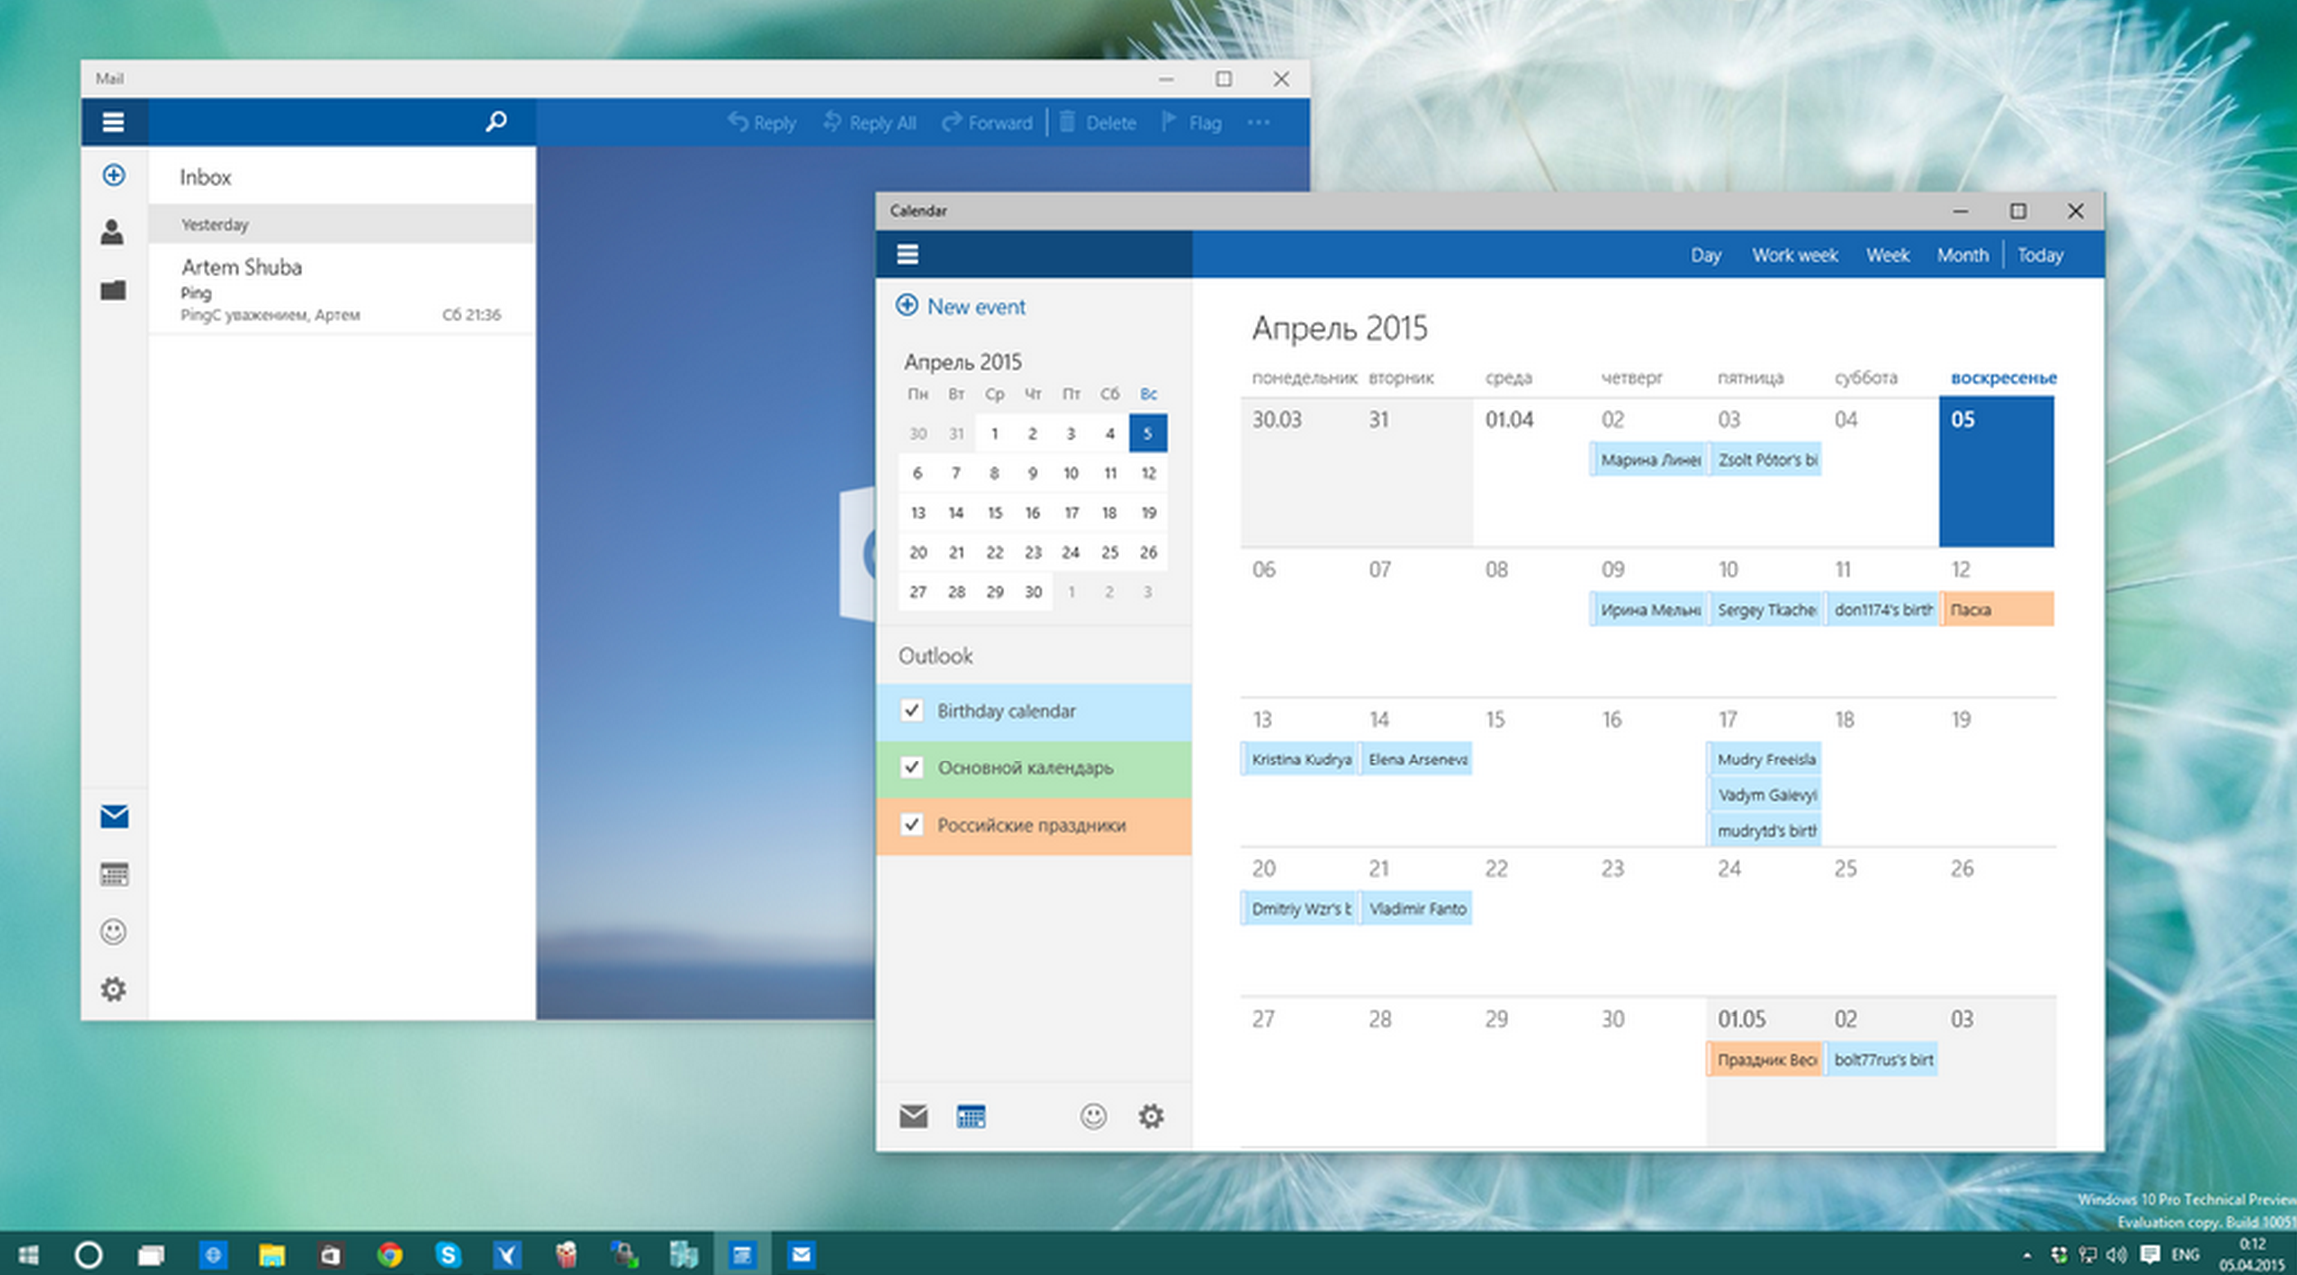 google calendar app for windows 8 desktop